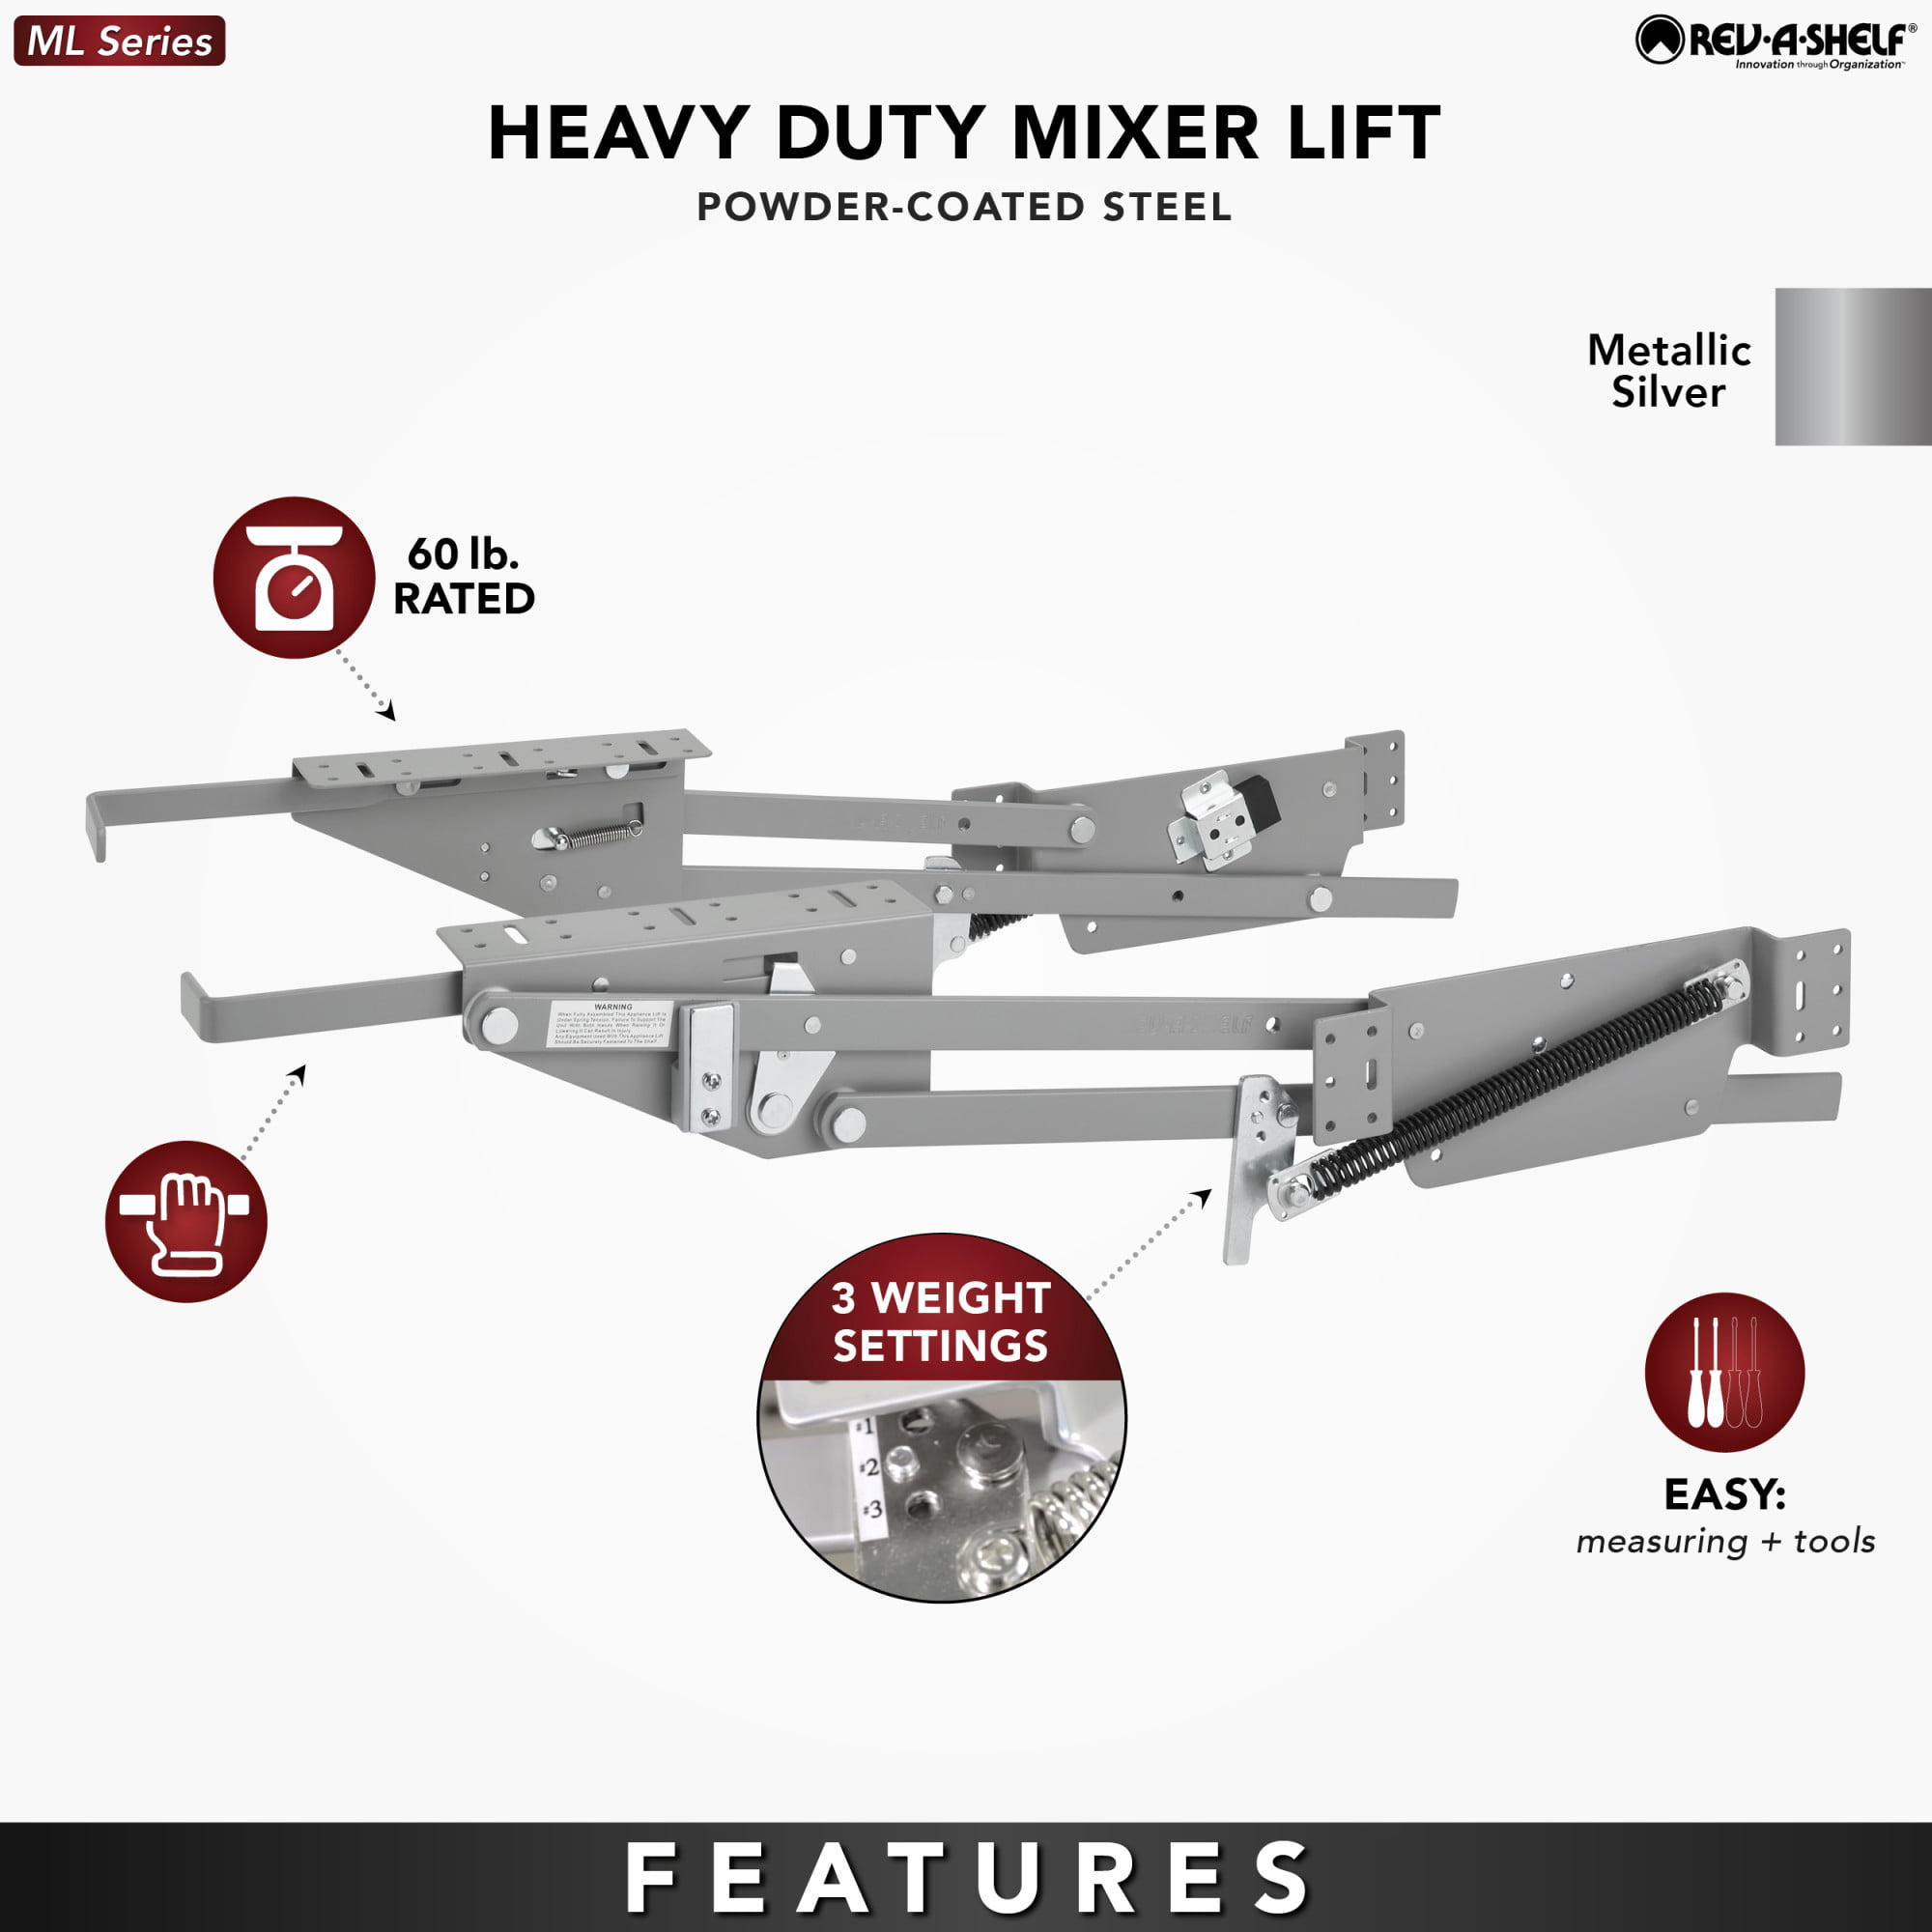 Mixer Lift for Cabinet-Appliance Lift-Heavy Duty Appliance Lift Assist  Kitchen C